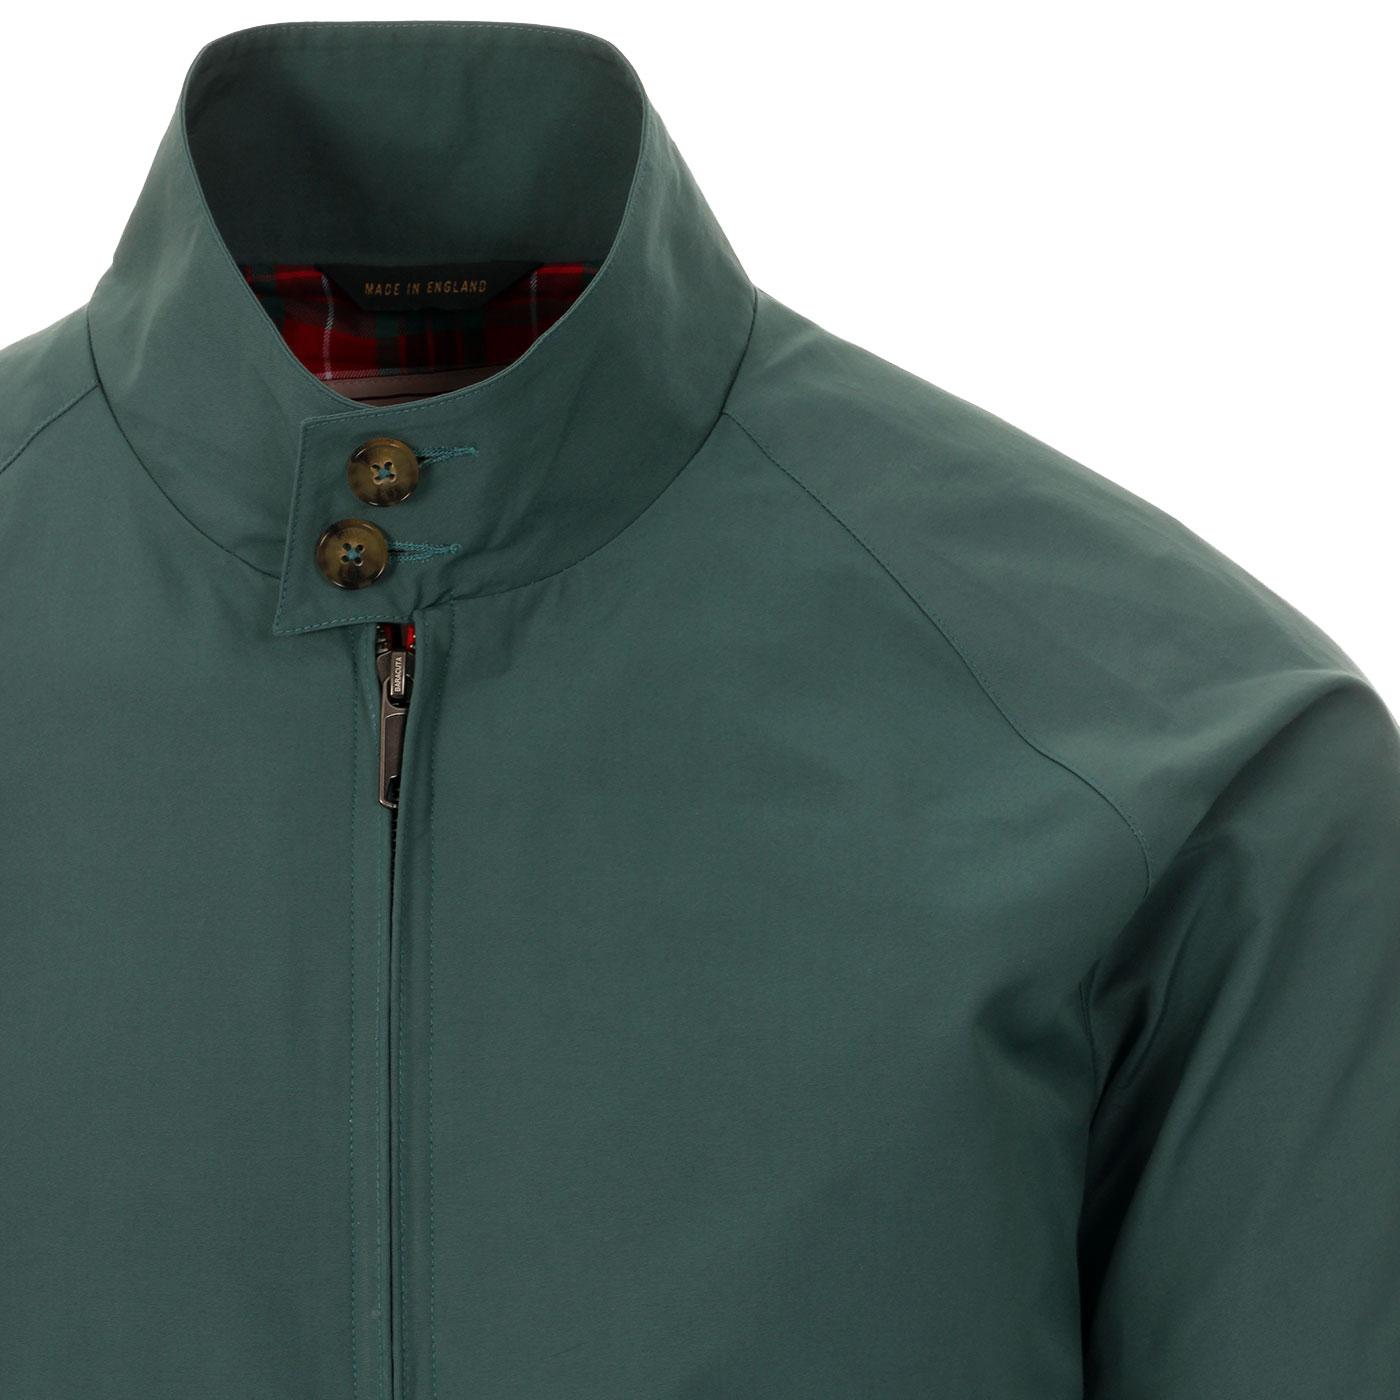 BARACUTA G4 Original Mod Harrington Jacket in greenlake